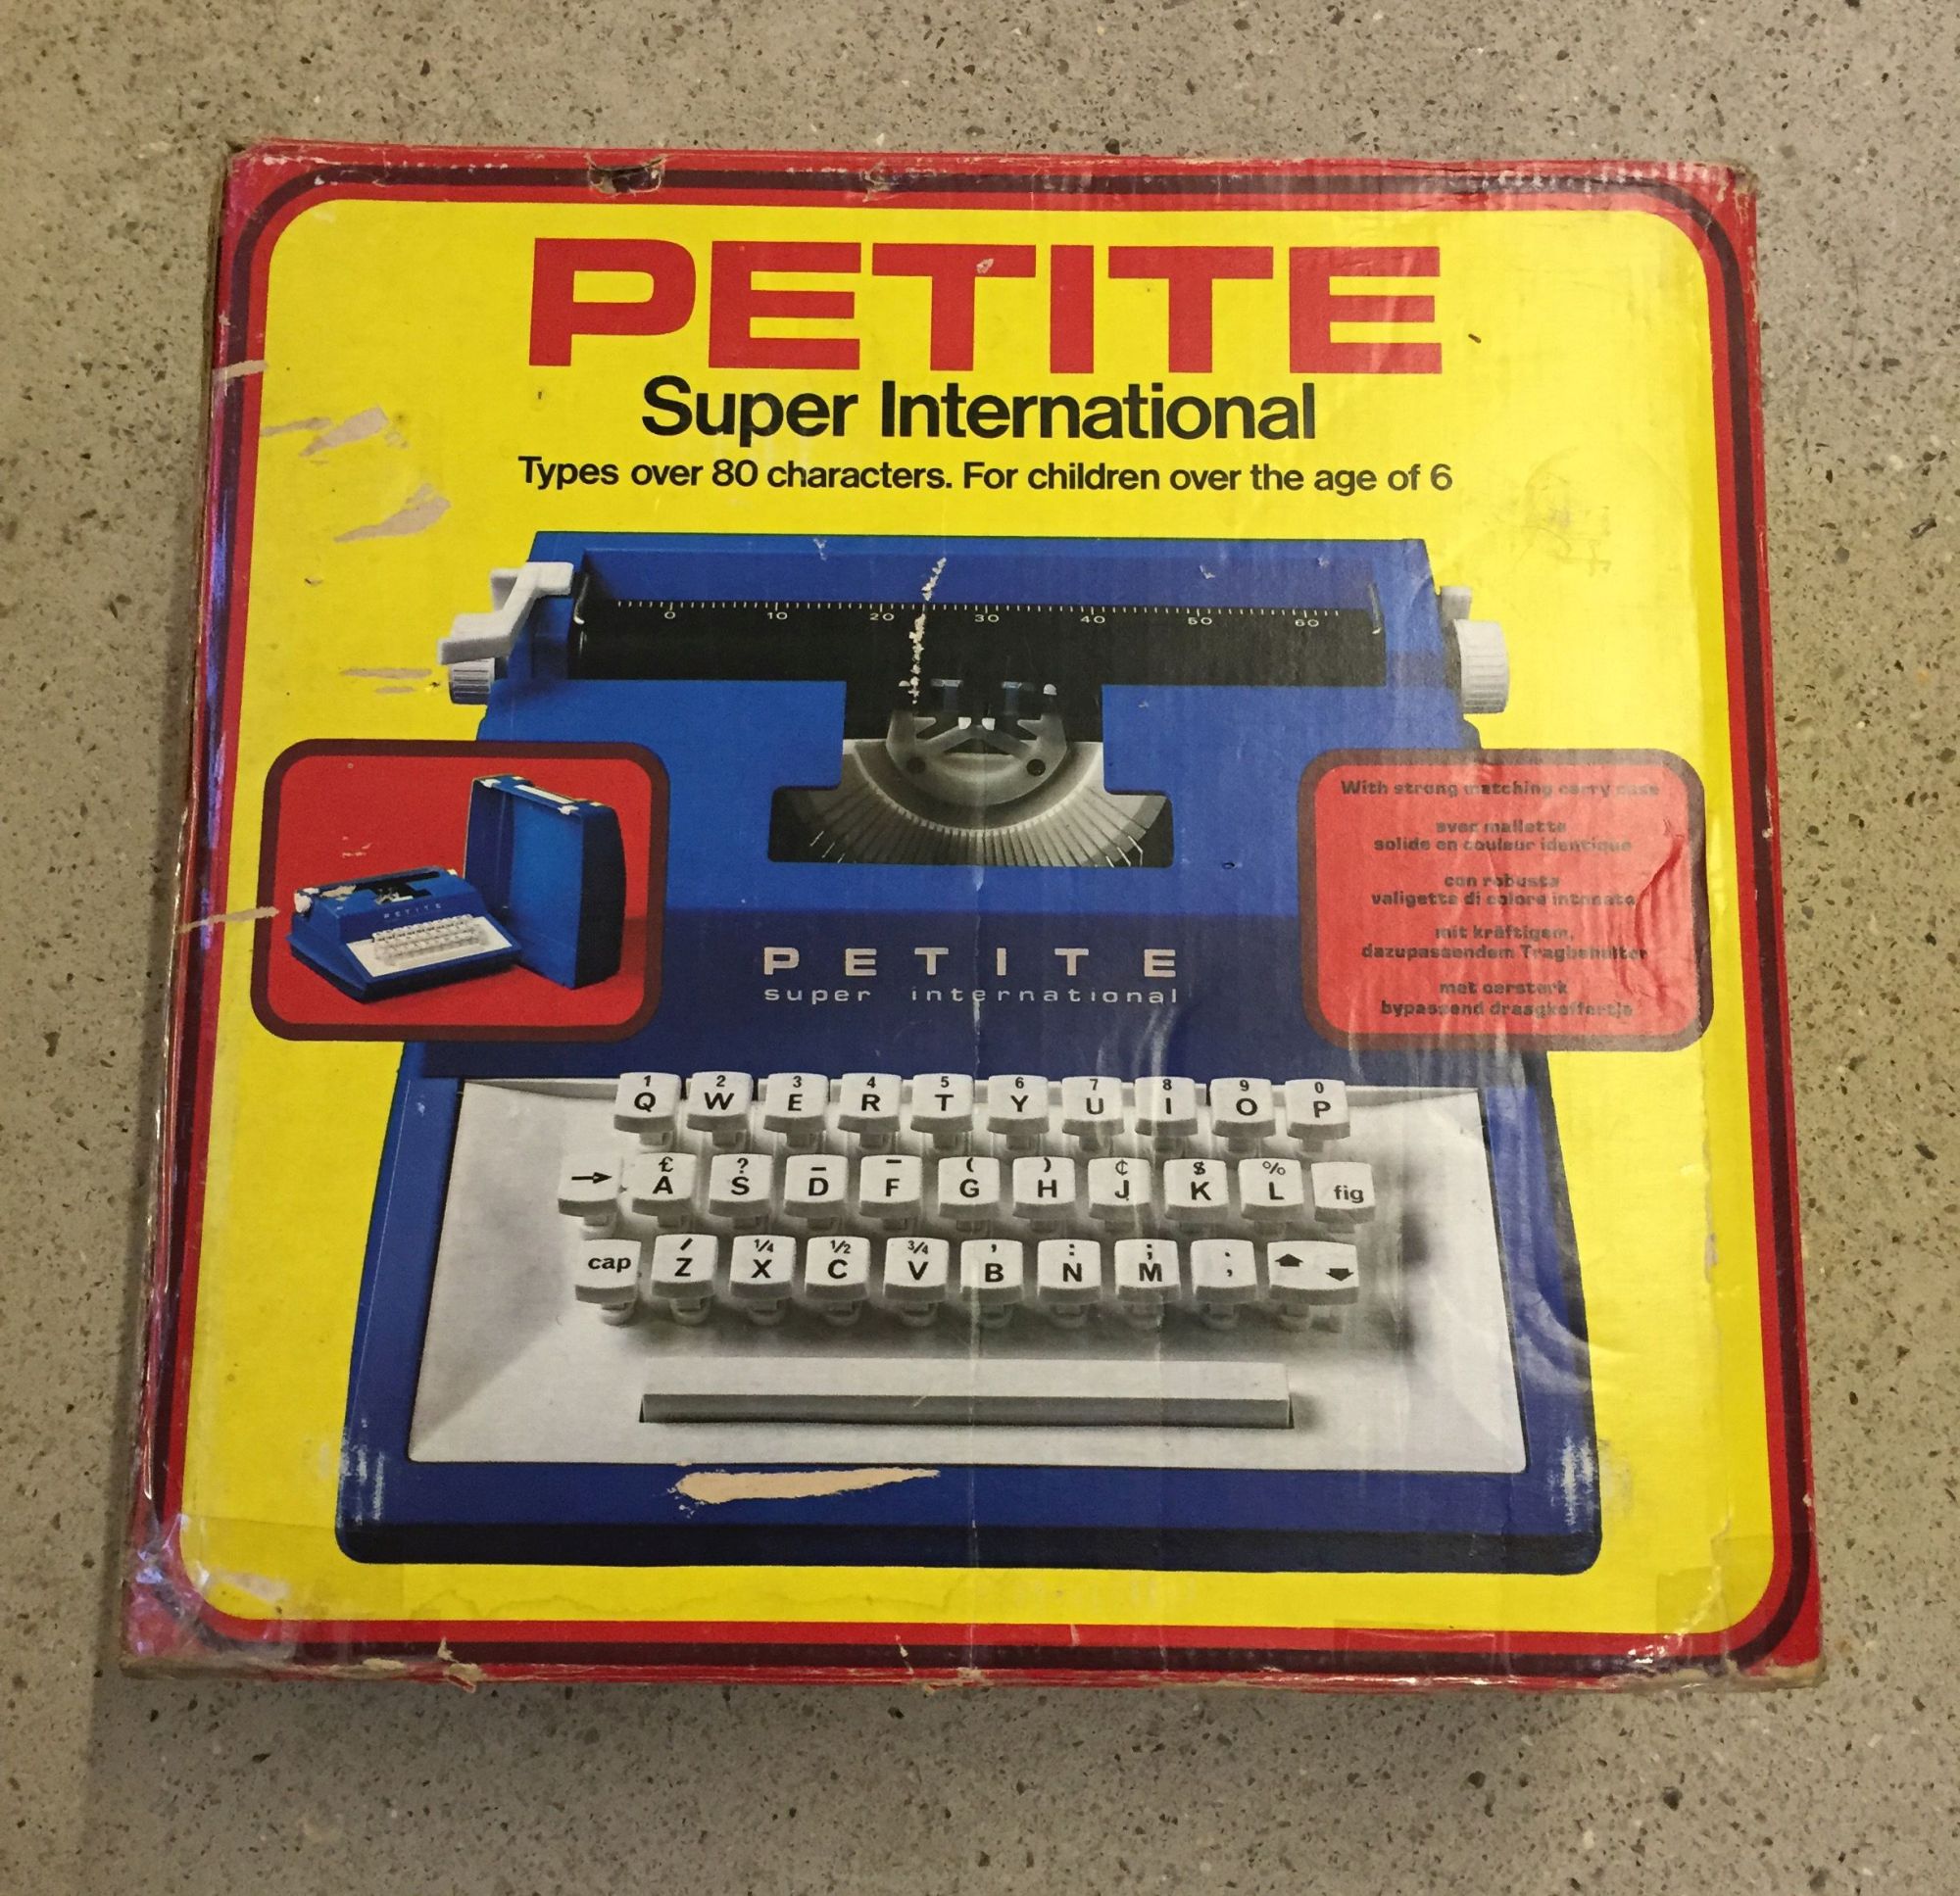 A boxed Petite Super International child's typewriter.